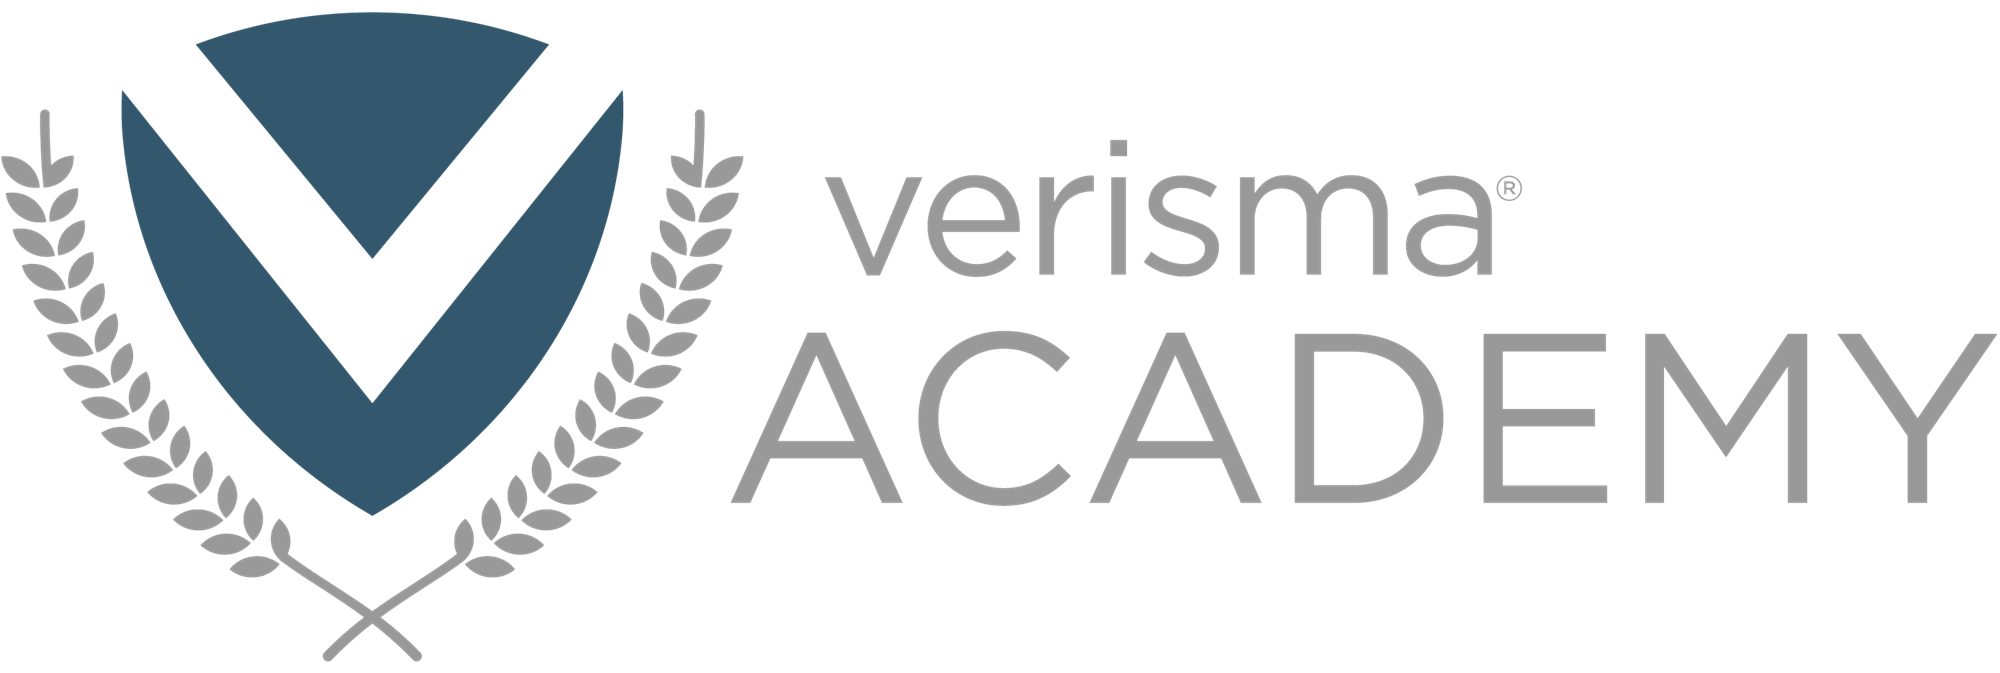 Verisma Academy Logo_Horz_1000px.png